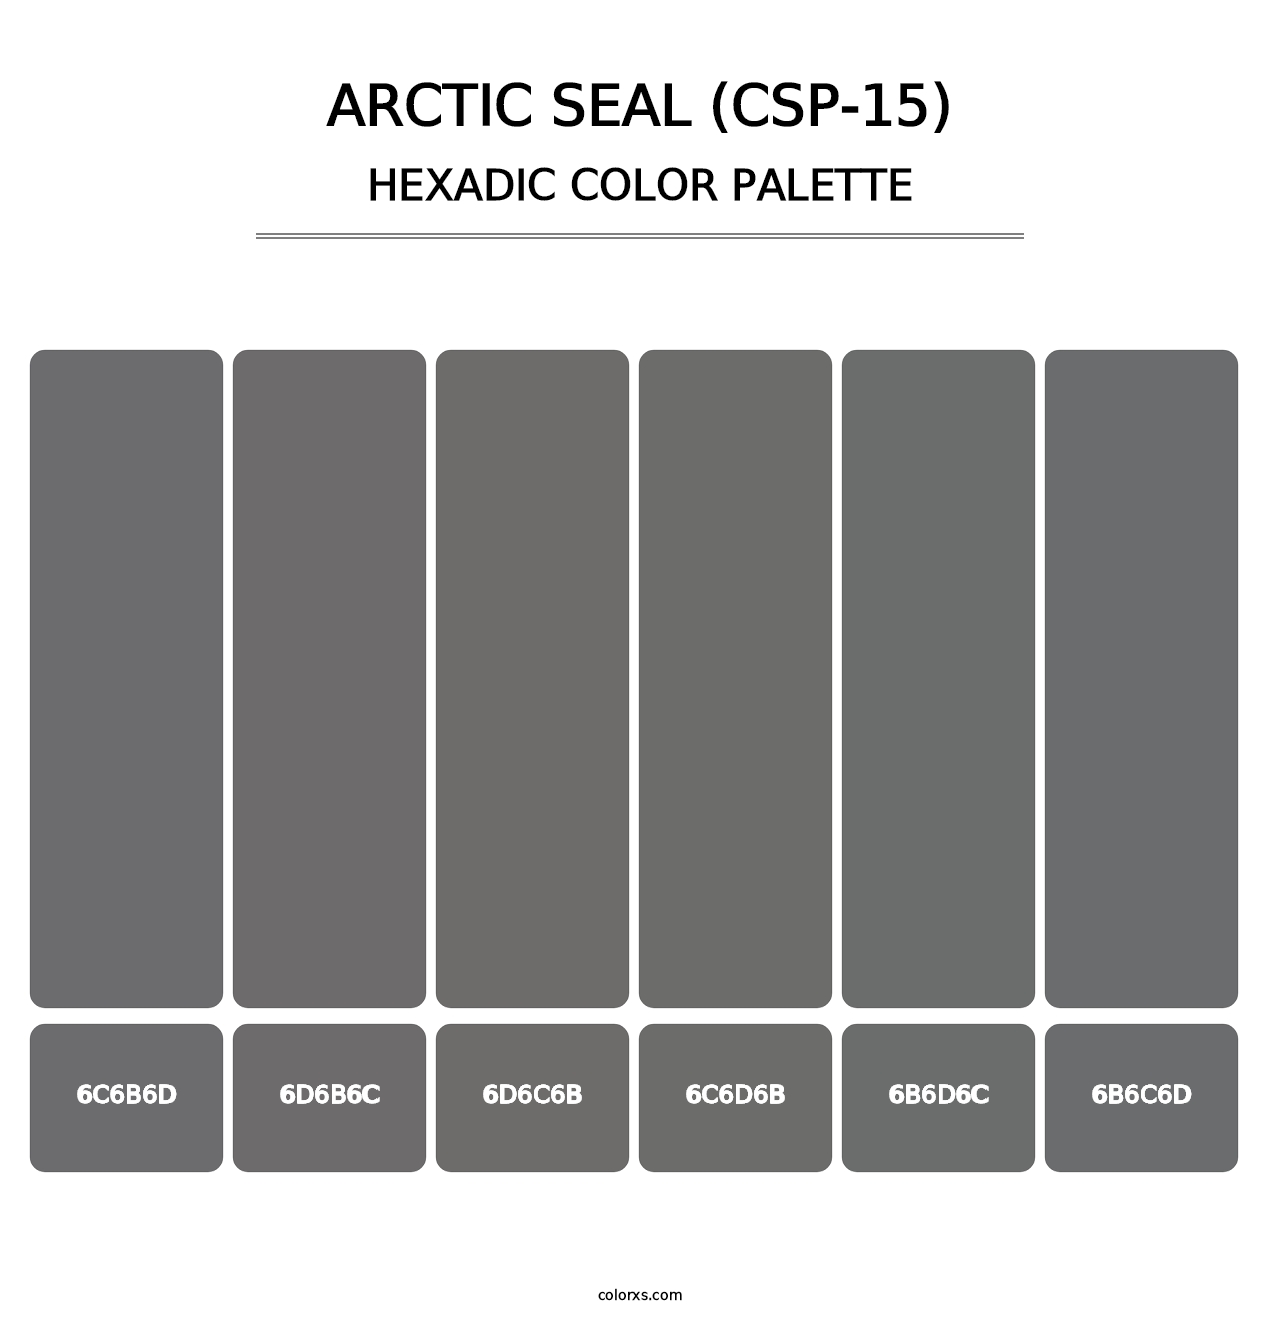 Arctic Seal (CSP-15) - Hexadic Color Palette